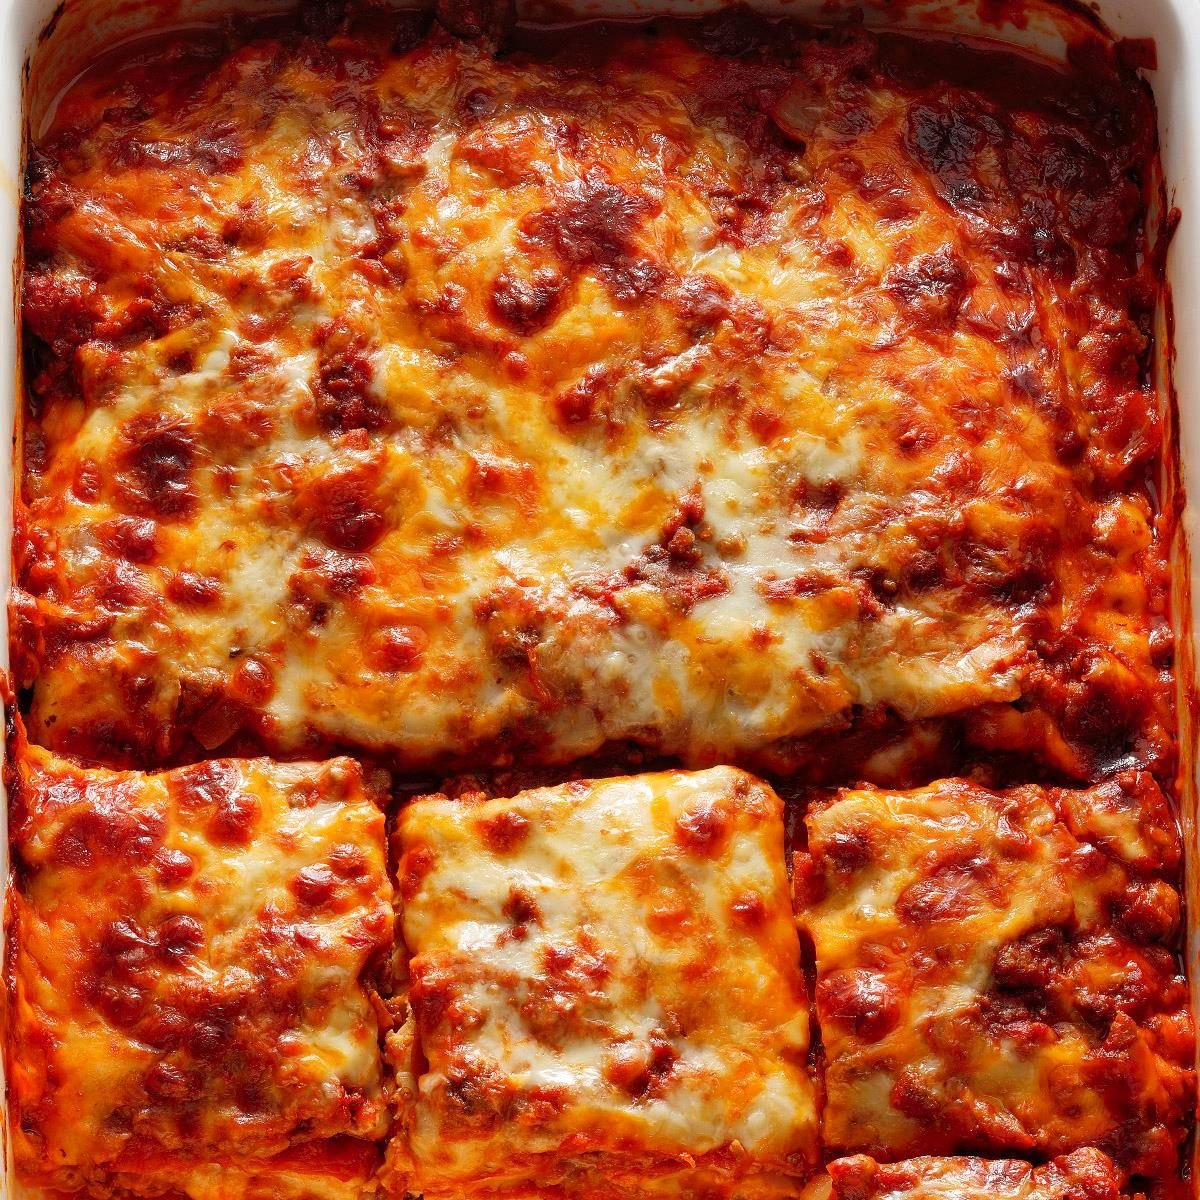 Low-Carb Lasagna Recipe: How to Make It